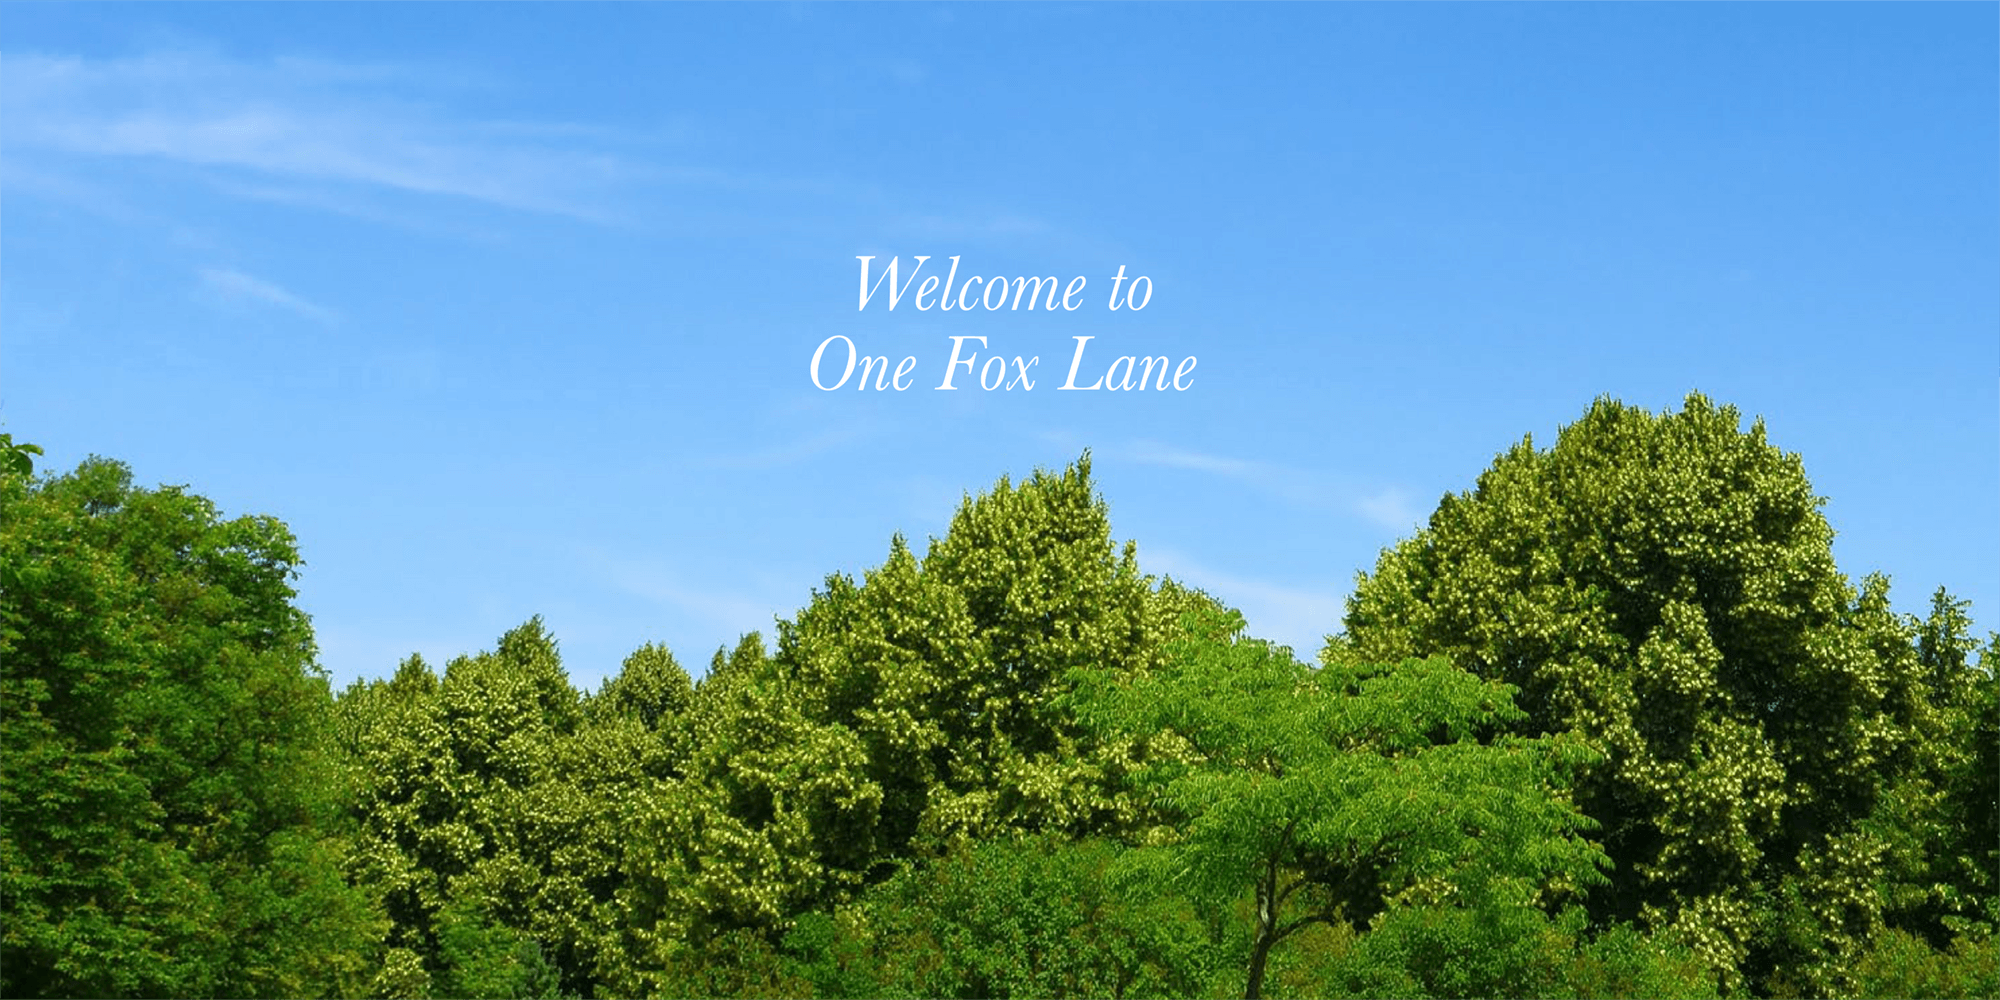 One Fox Lane